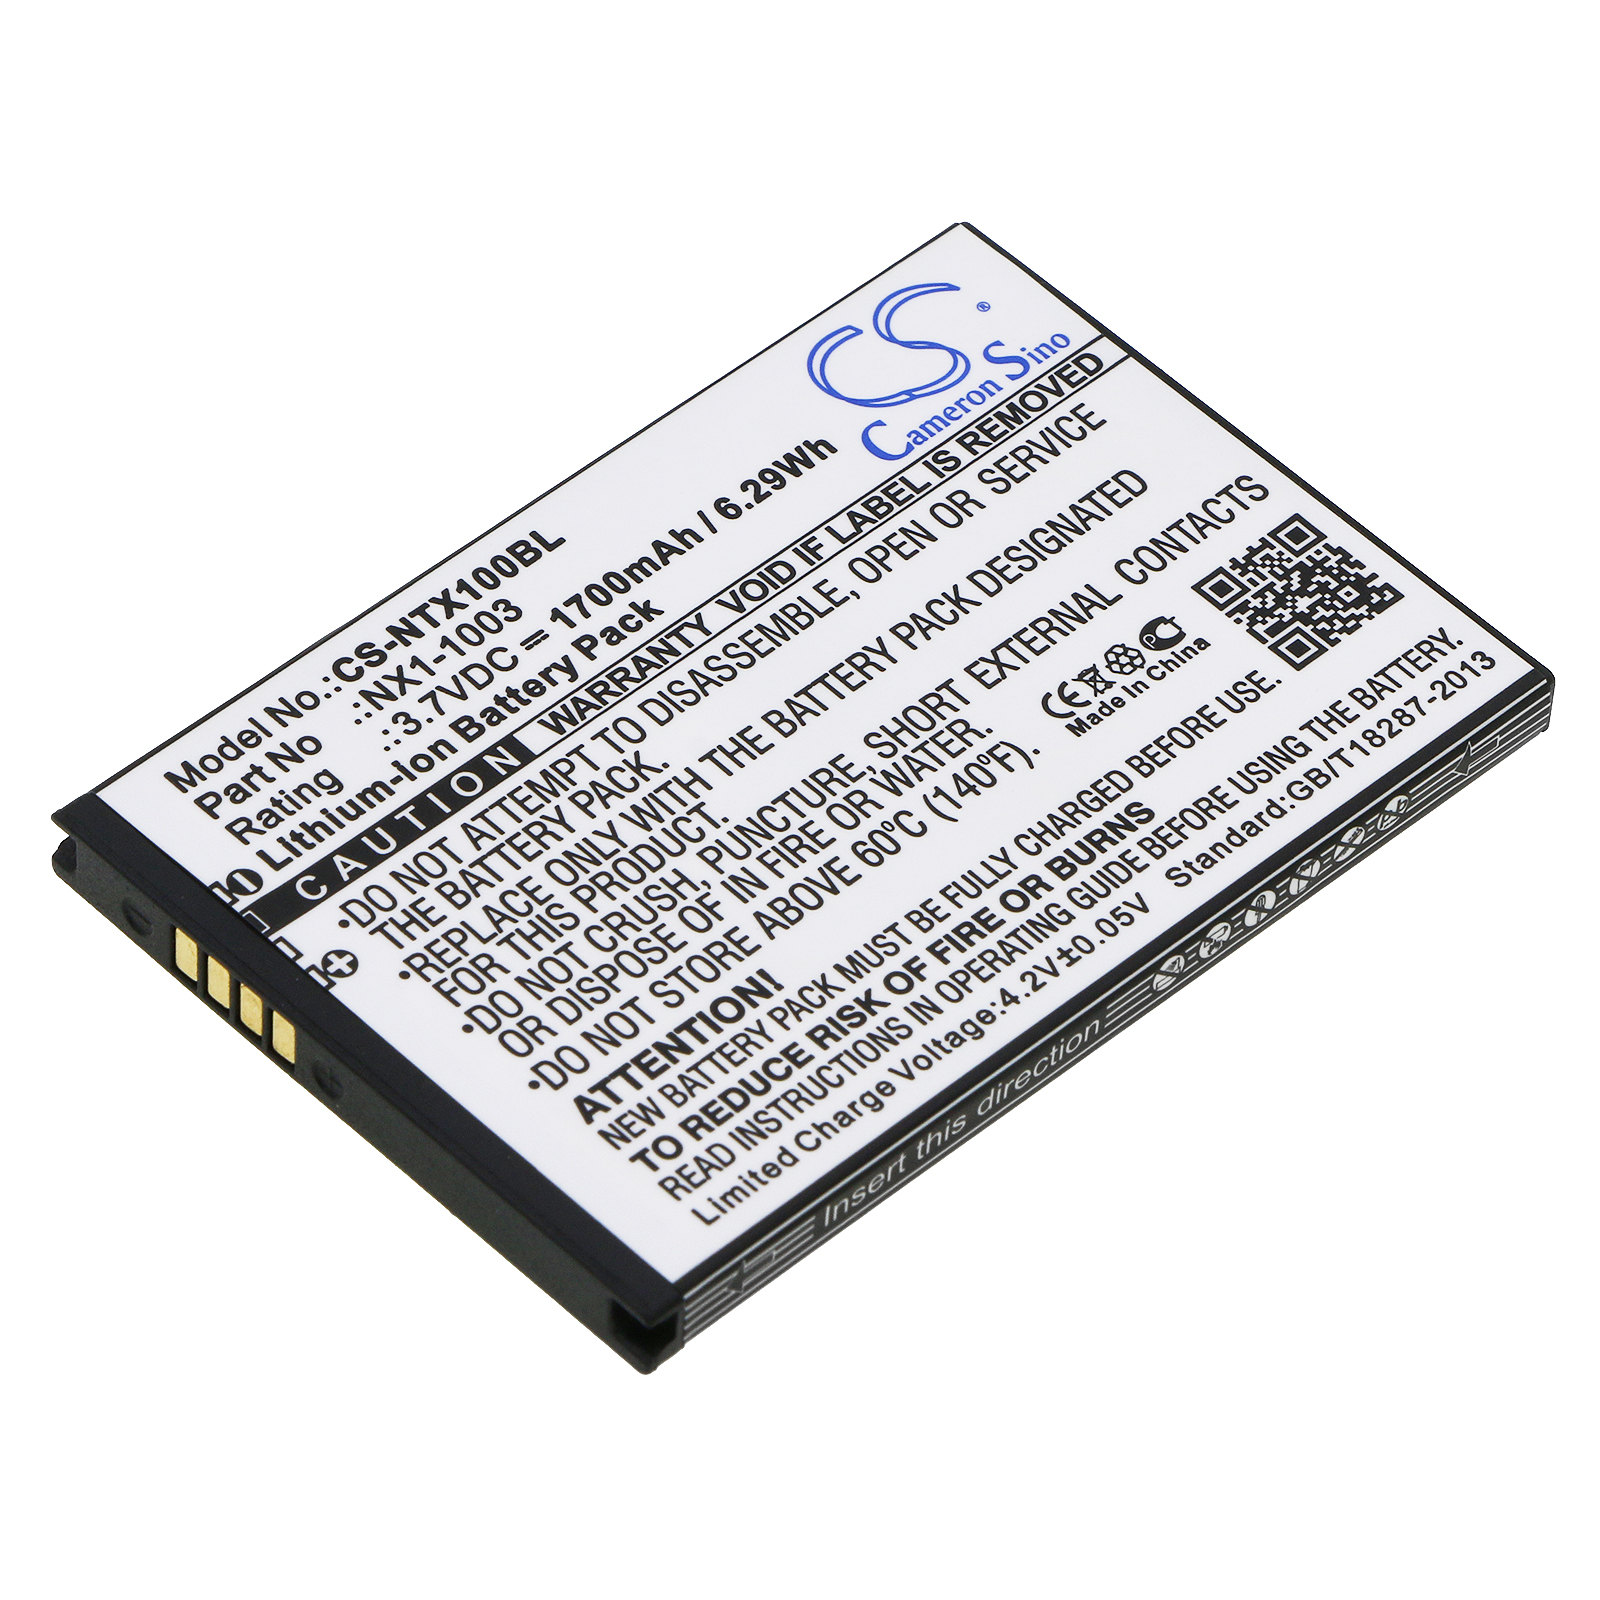 NX8-1004 BP14-001200 Replacement PN 162403210 BAT-G2-003 6800mAh Battery Compatible with Handheld Nautiz X8 Scanner 